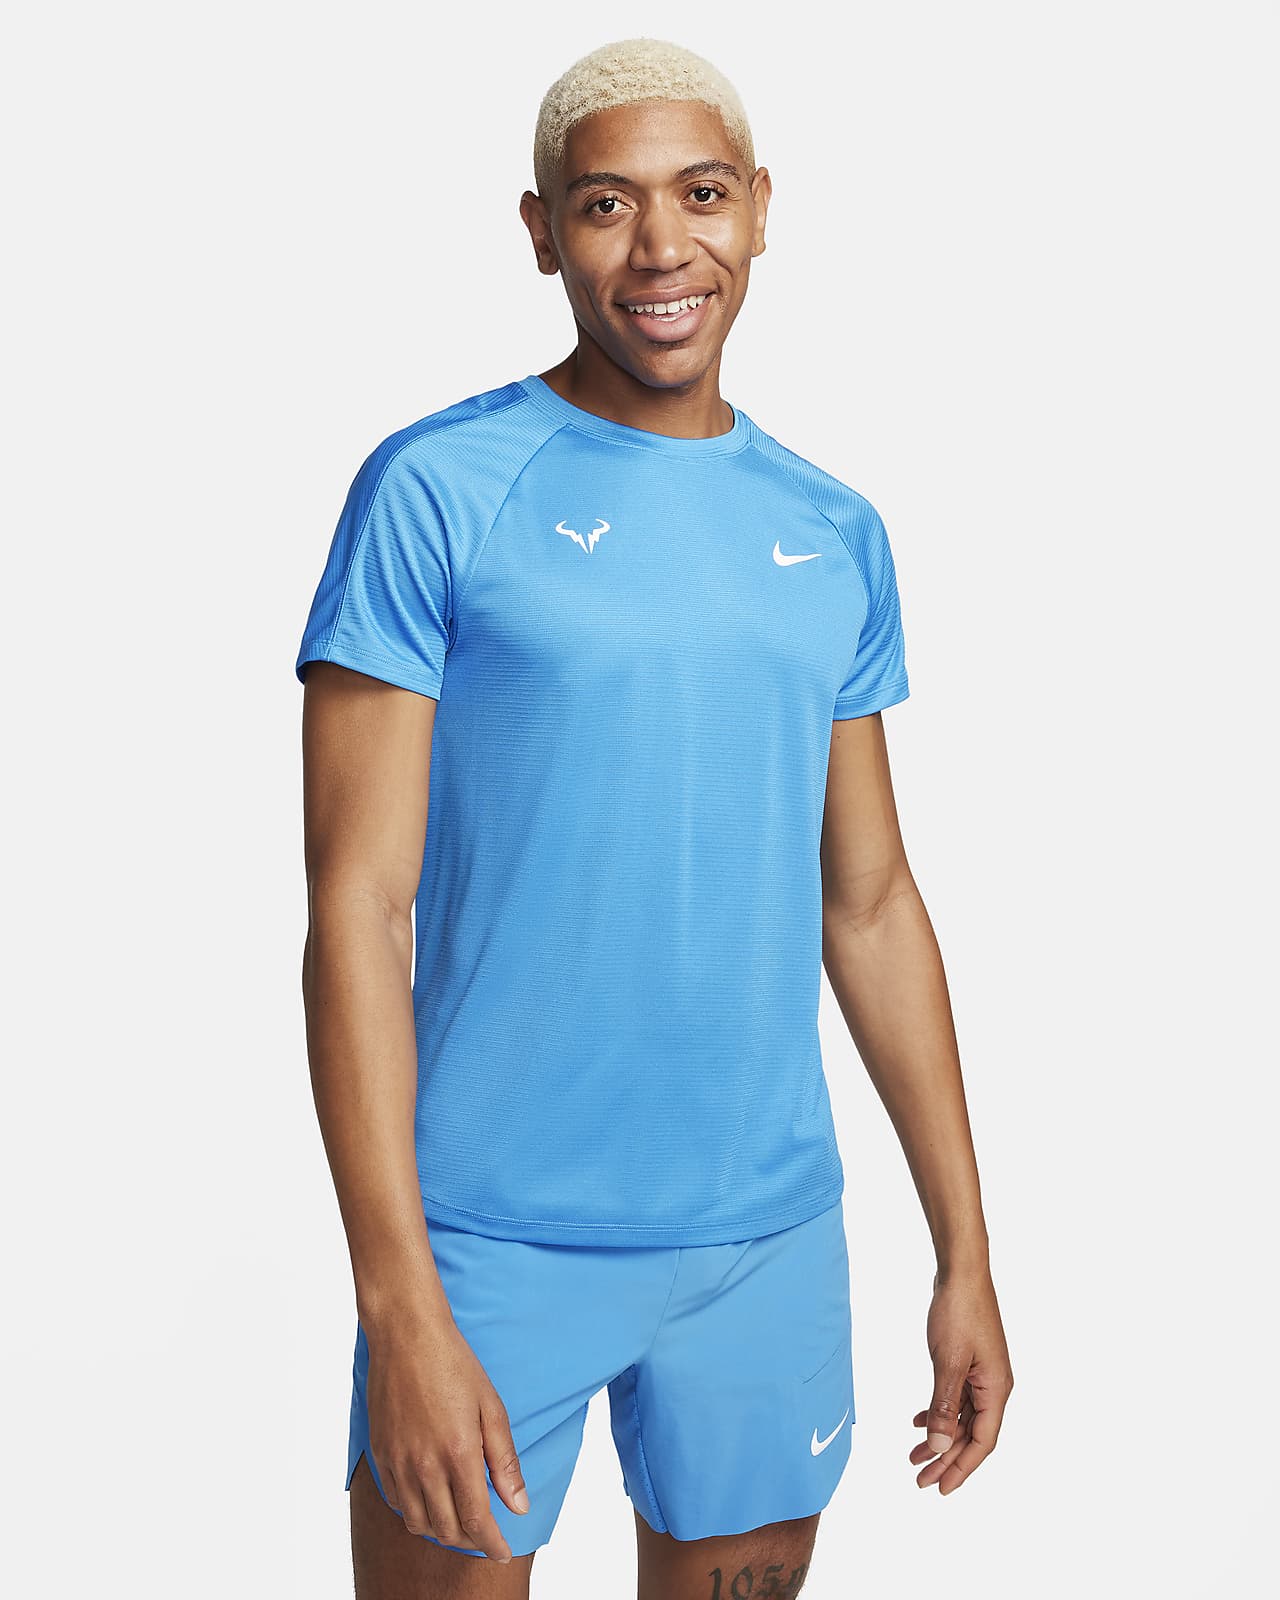 Rafa Challenger Samarreta de màniga curta Nike Dri-FIT de tennis - Home